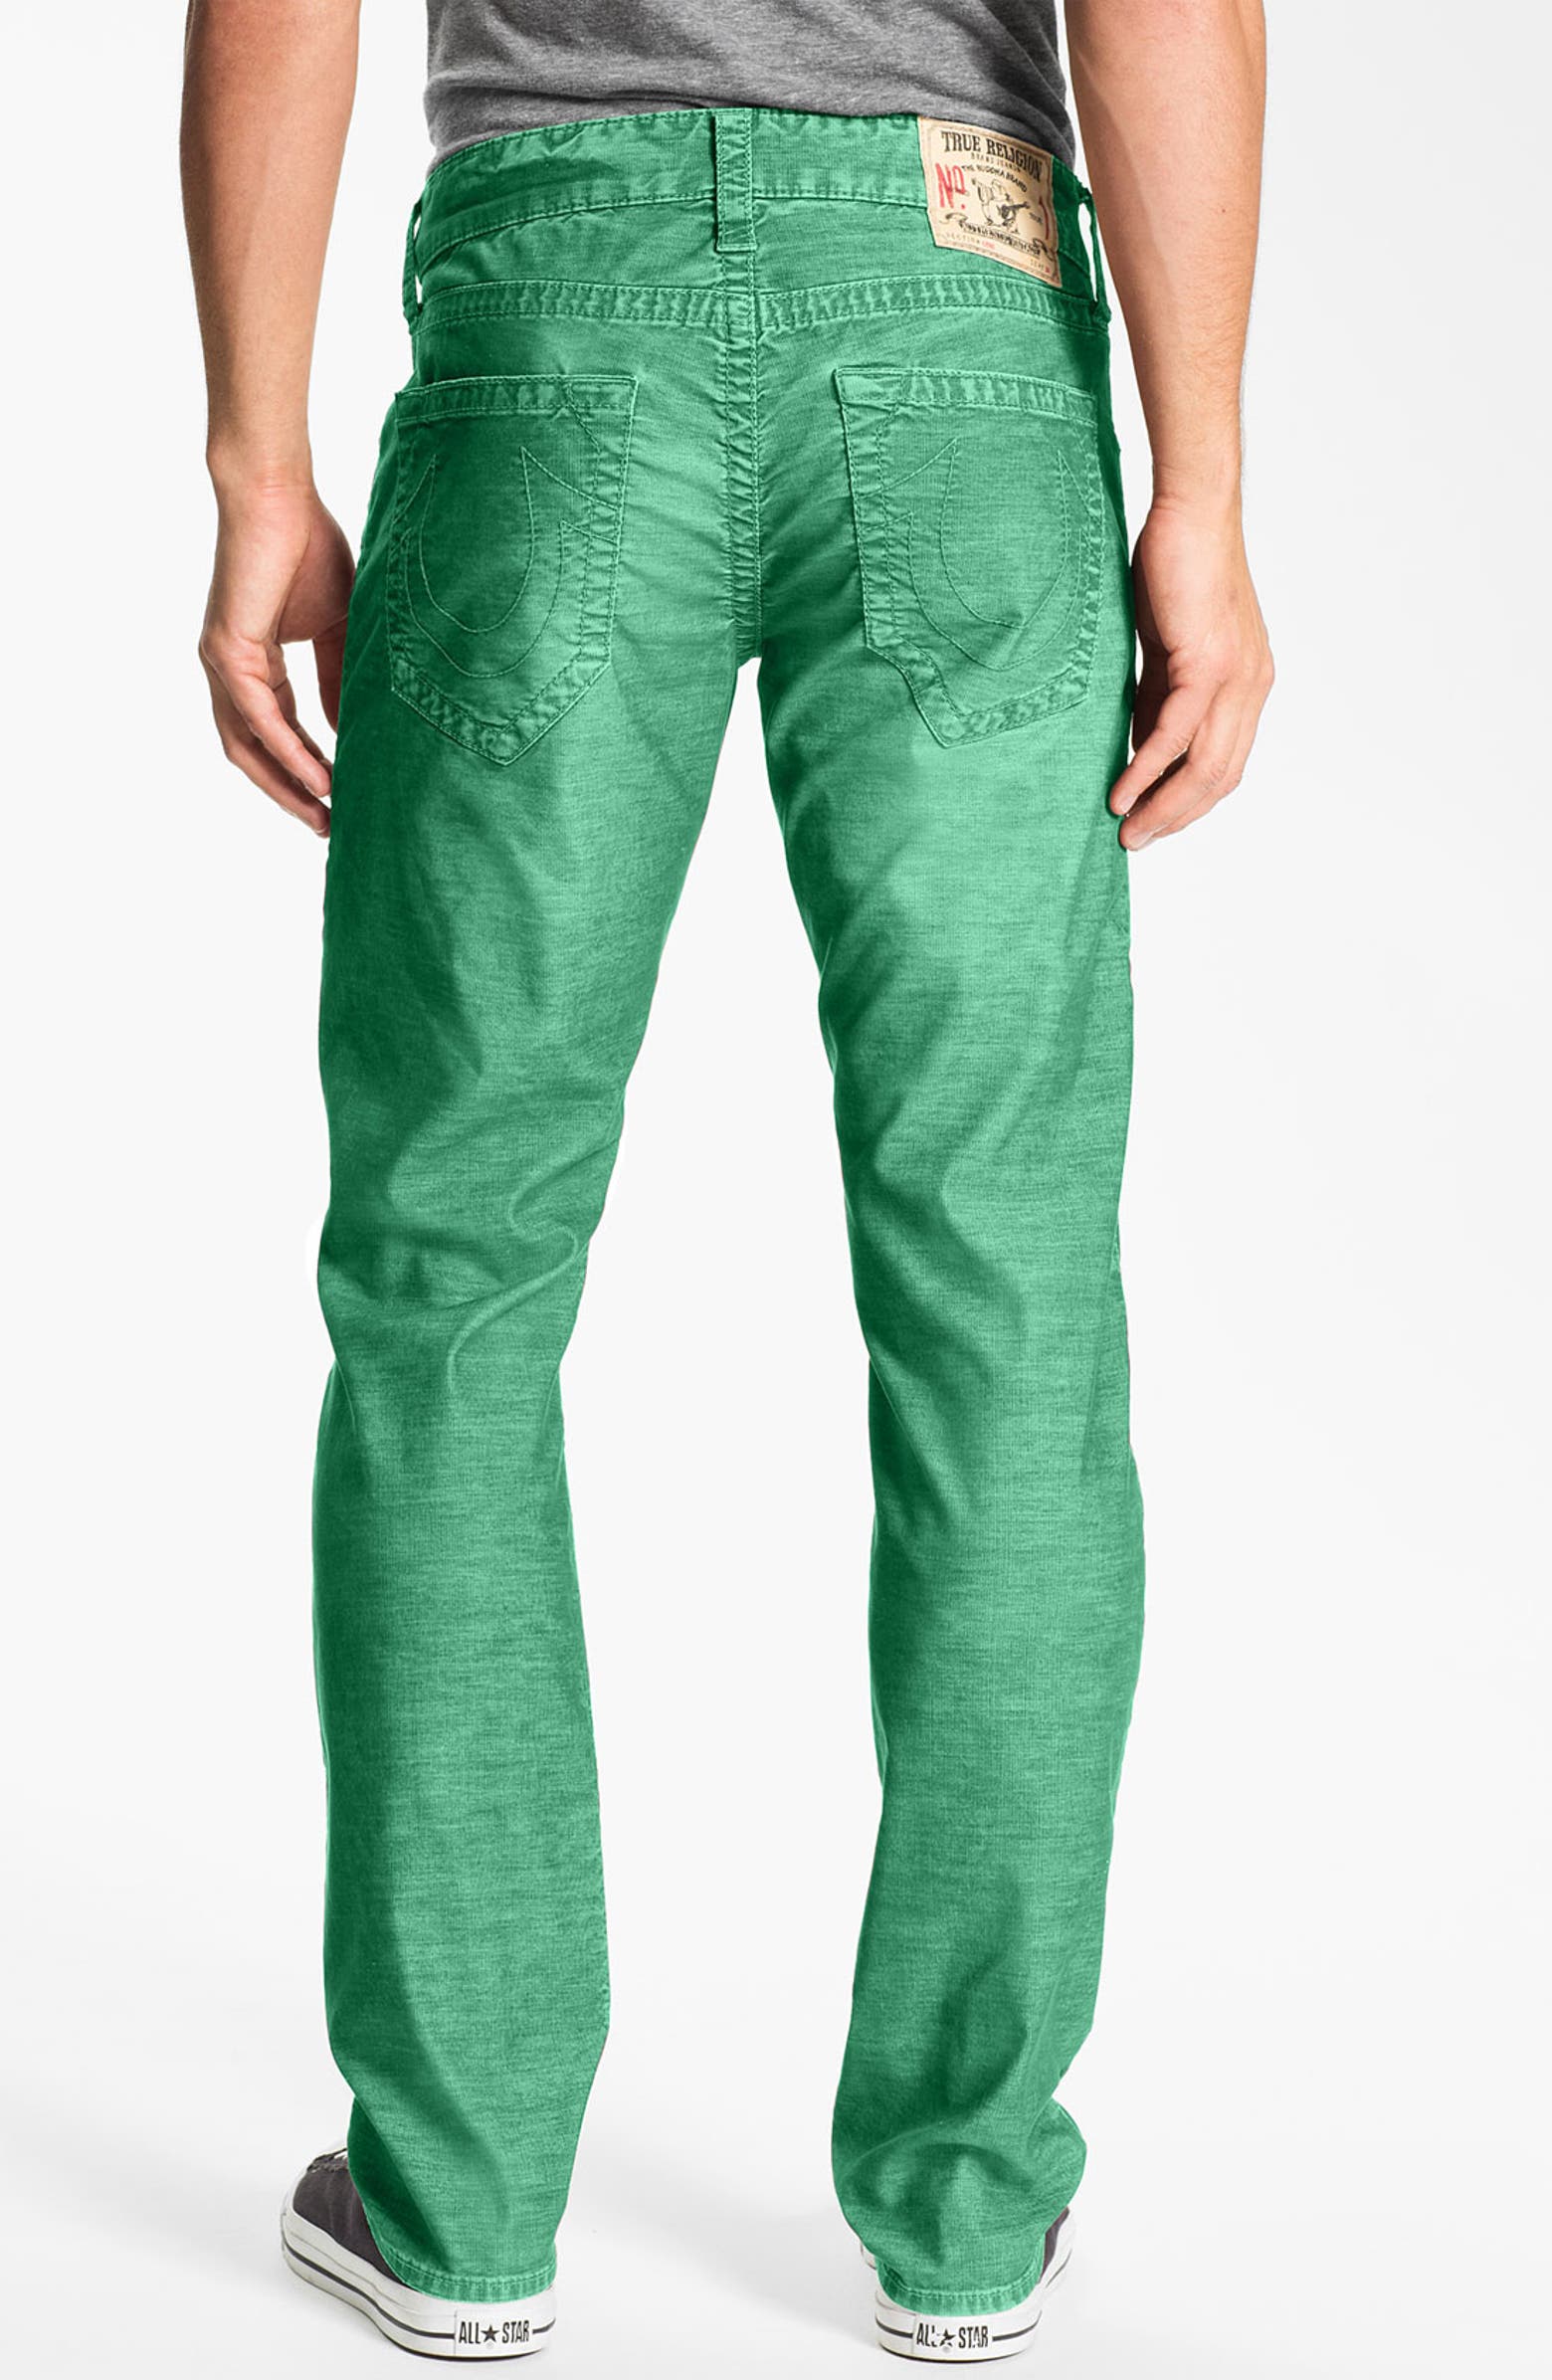 True Religion Brand Jeans 'Geno' Slim Corduroy Pants | Nordstrom